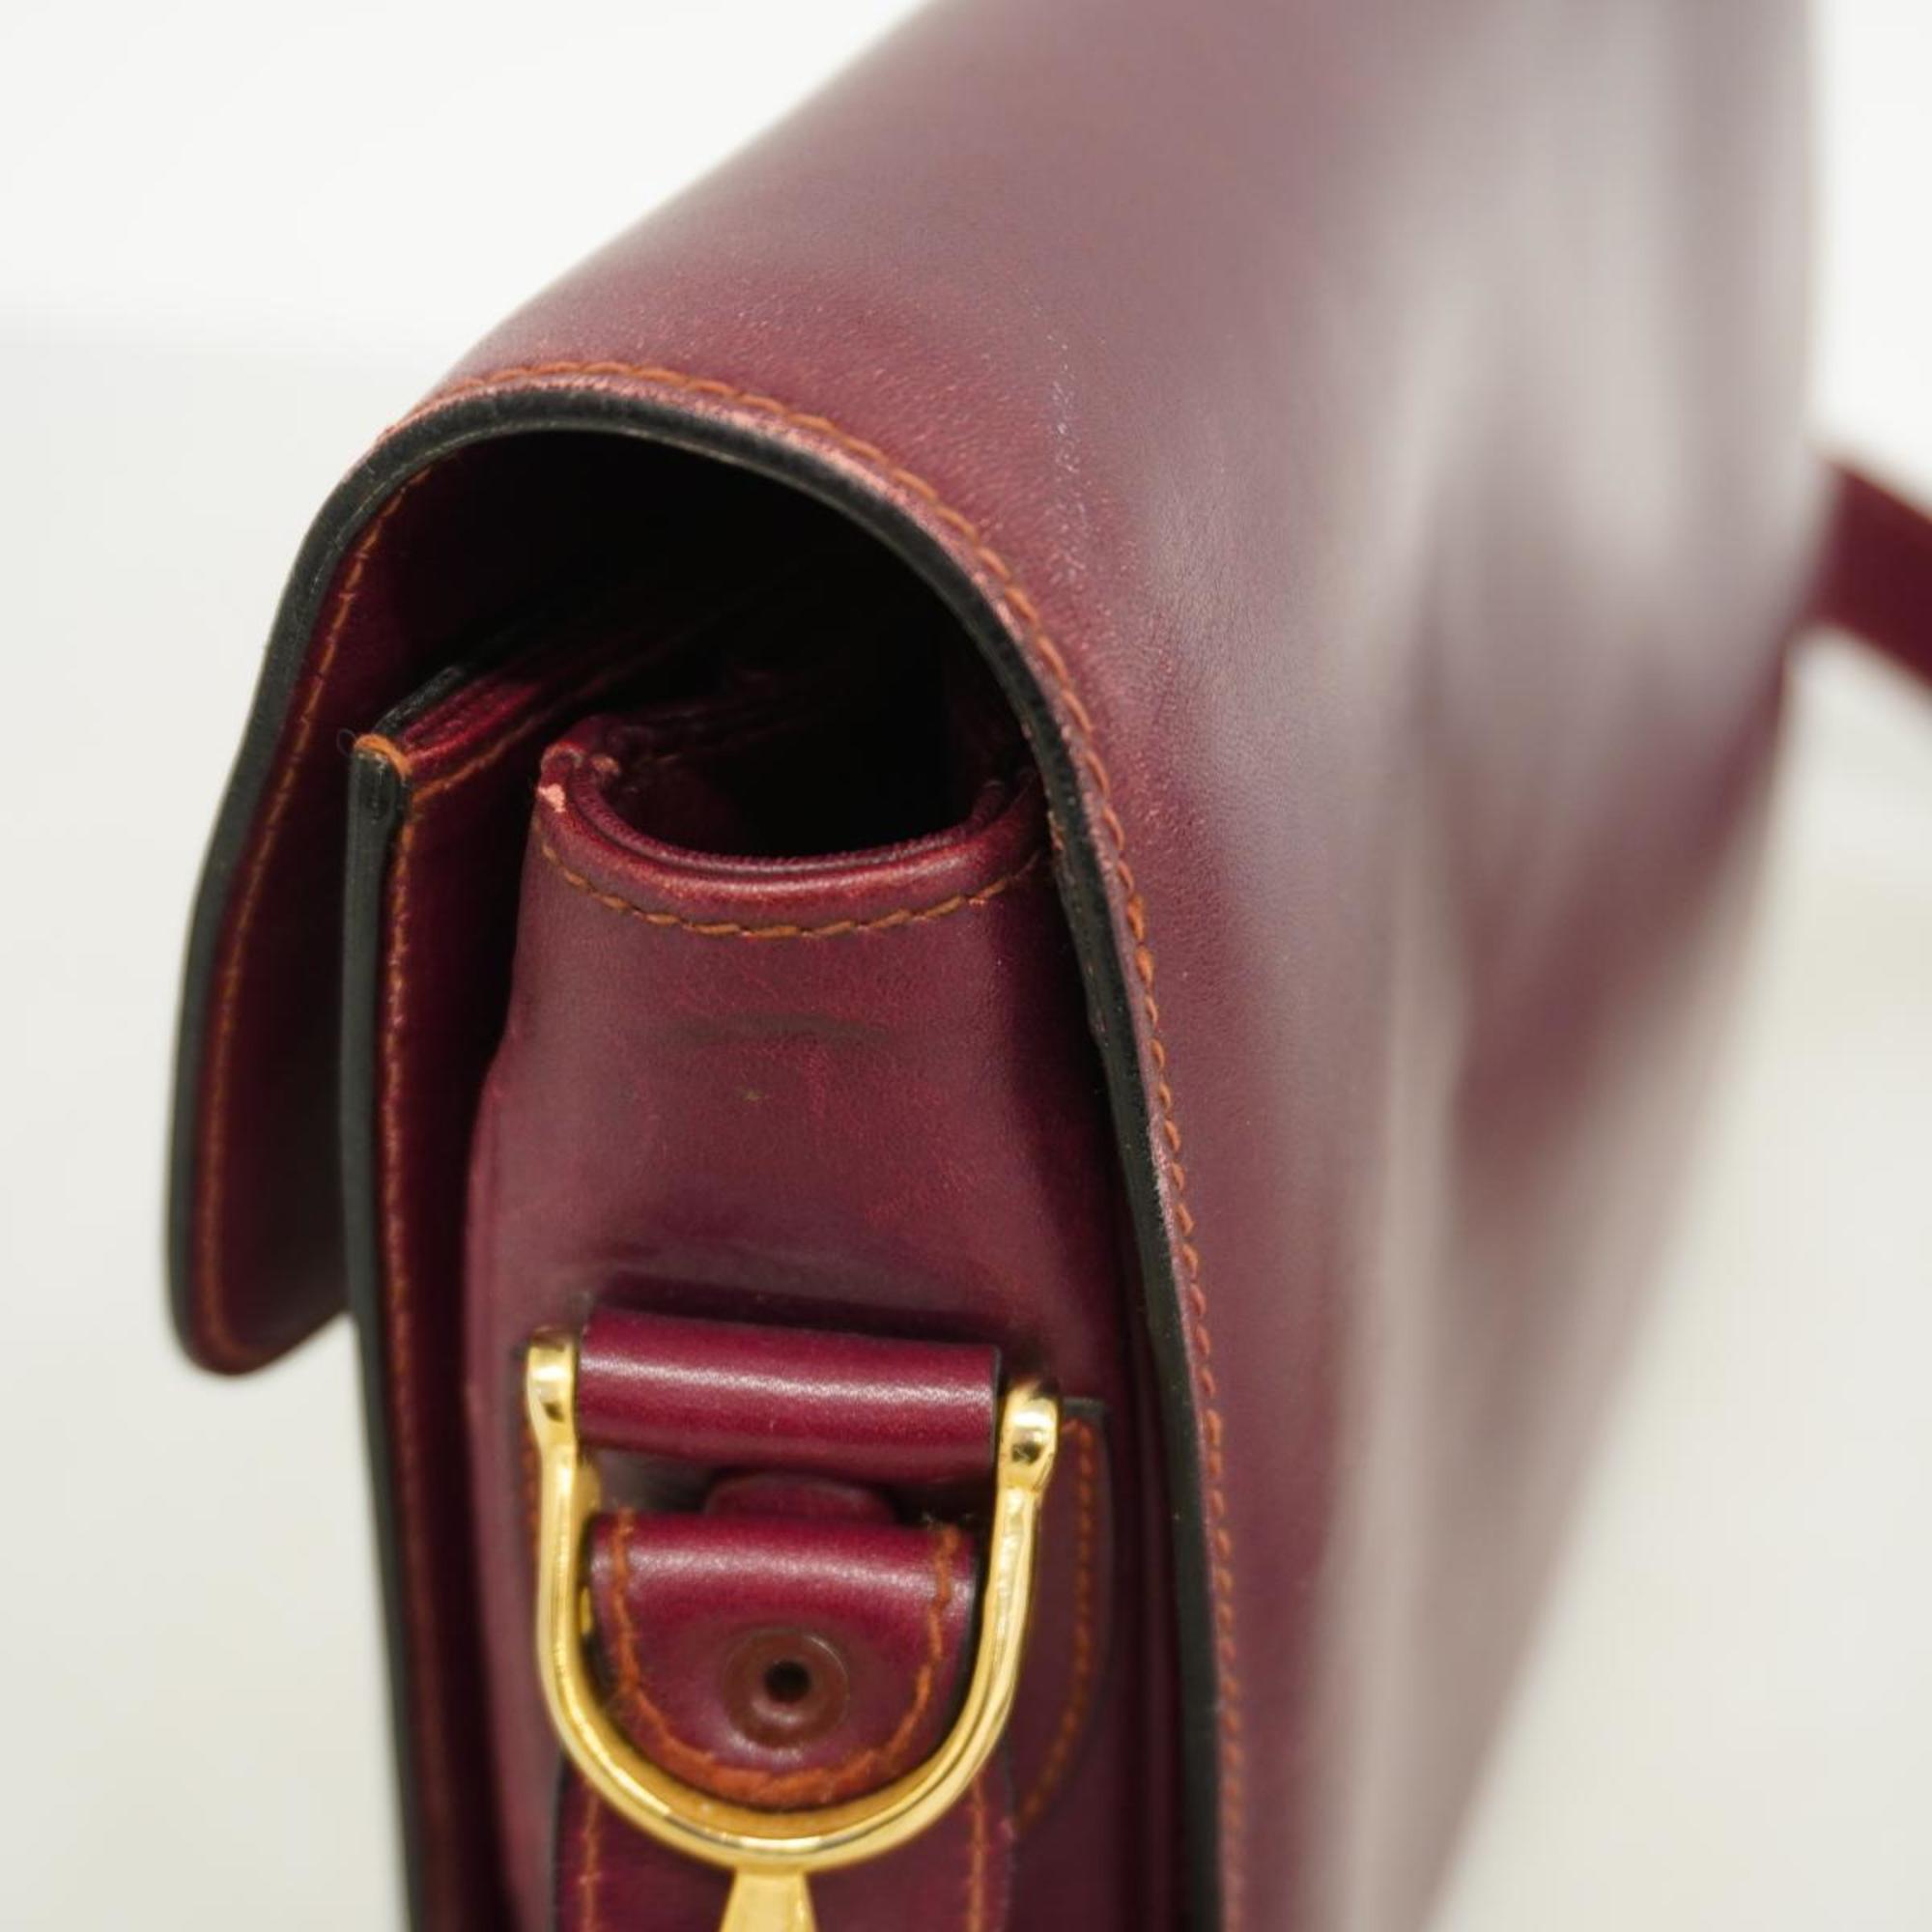 Celine shoulder bag, carriage hardware, leather, Bordeaux, women's